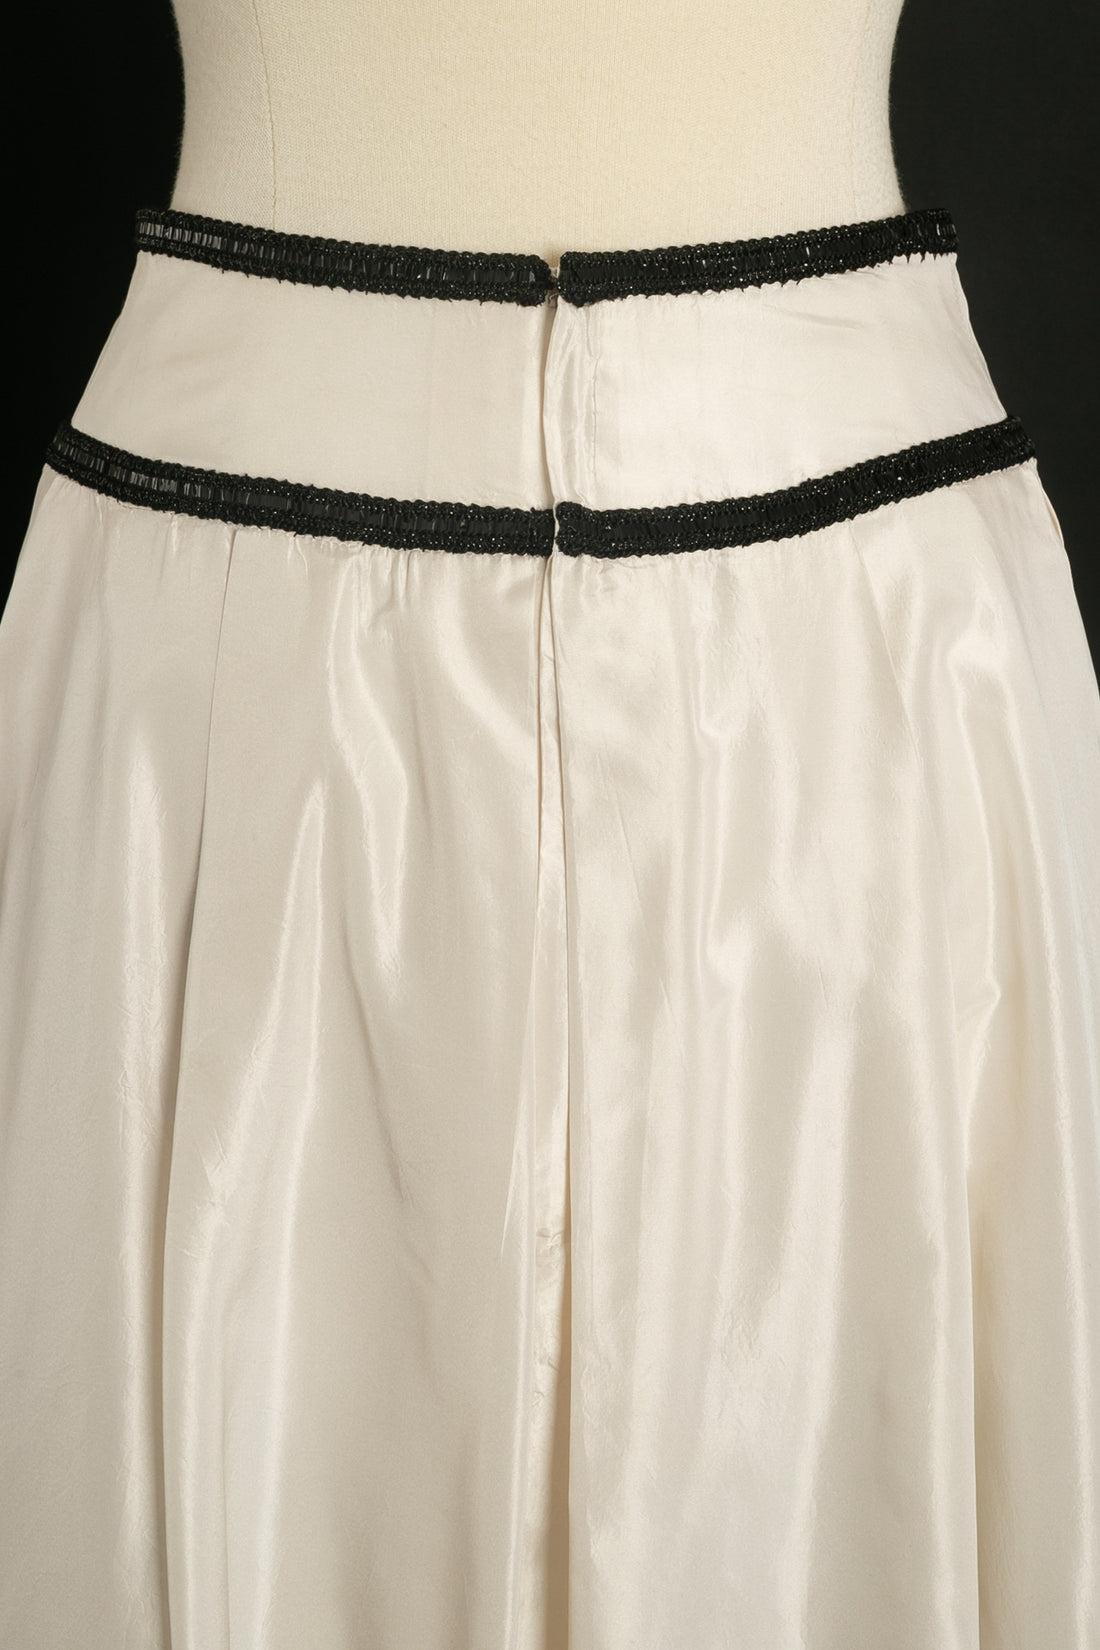 Loris Azzaro Taffeta Bustier and Skirt Set For Sale 9